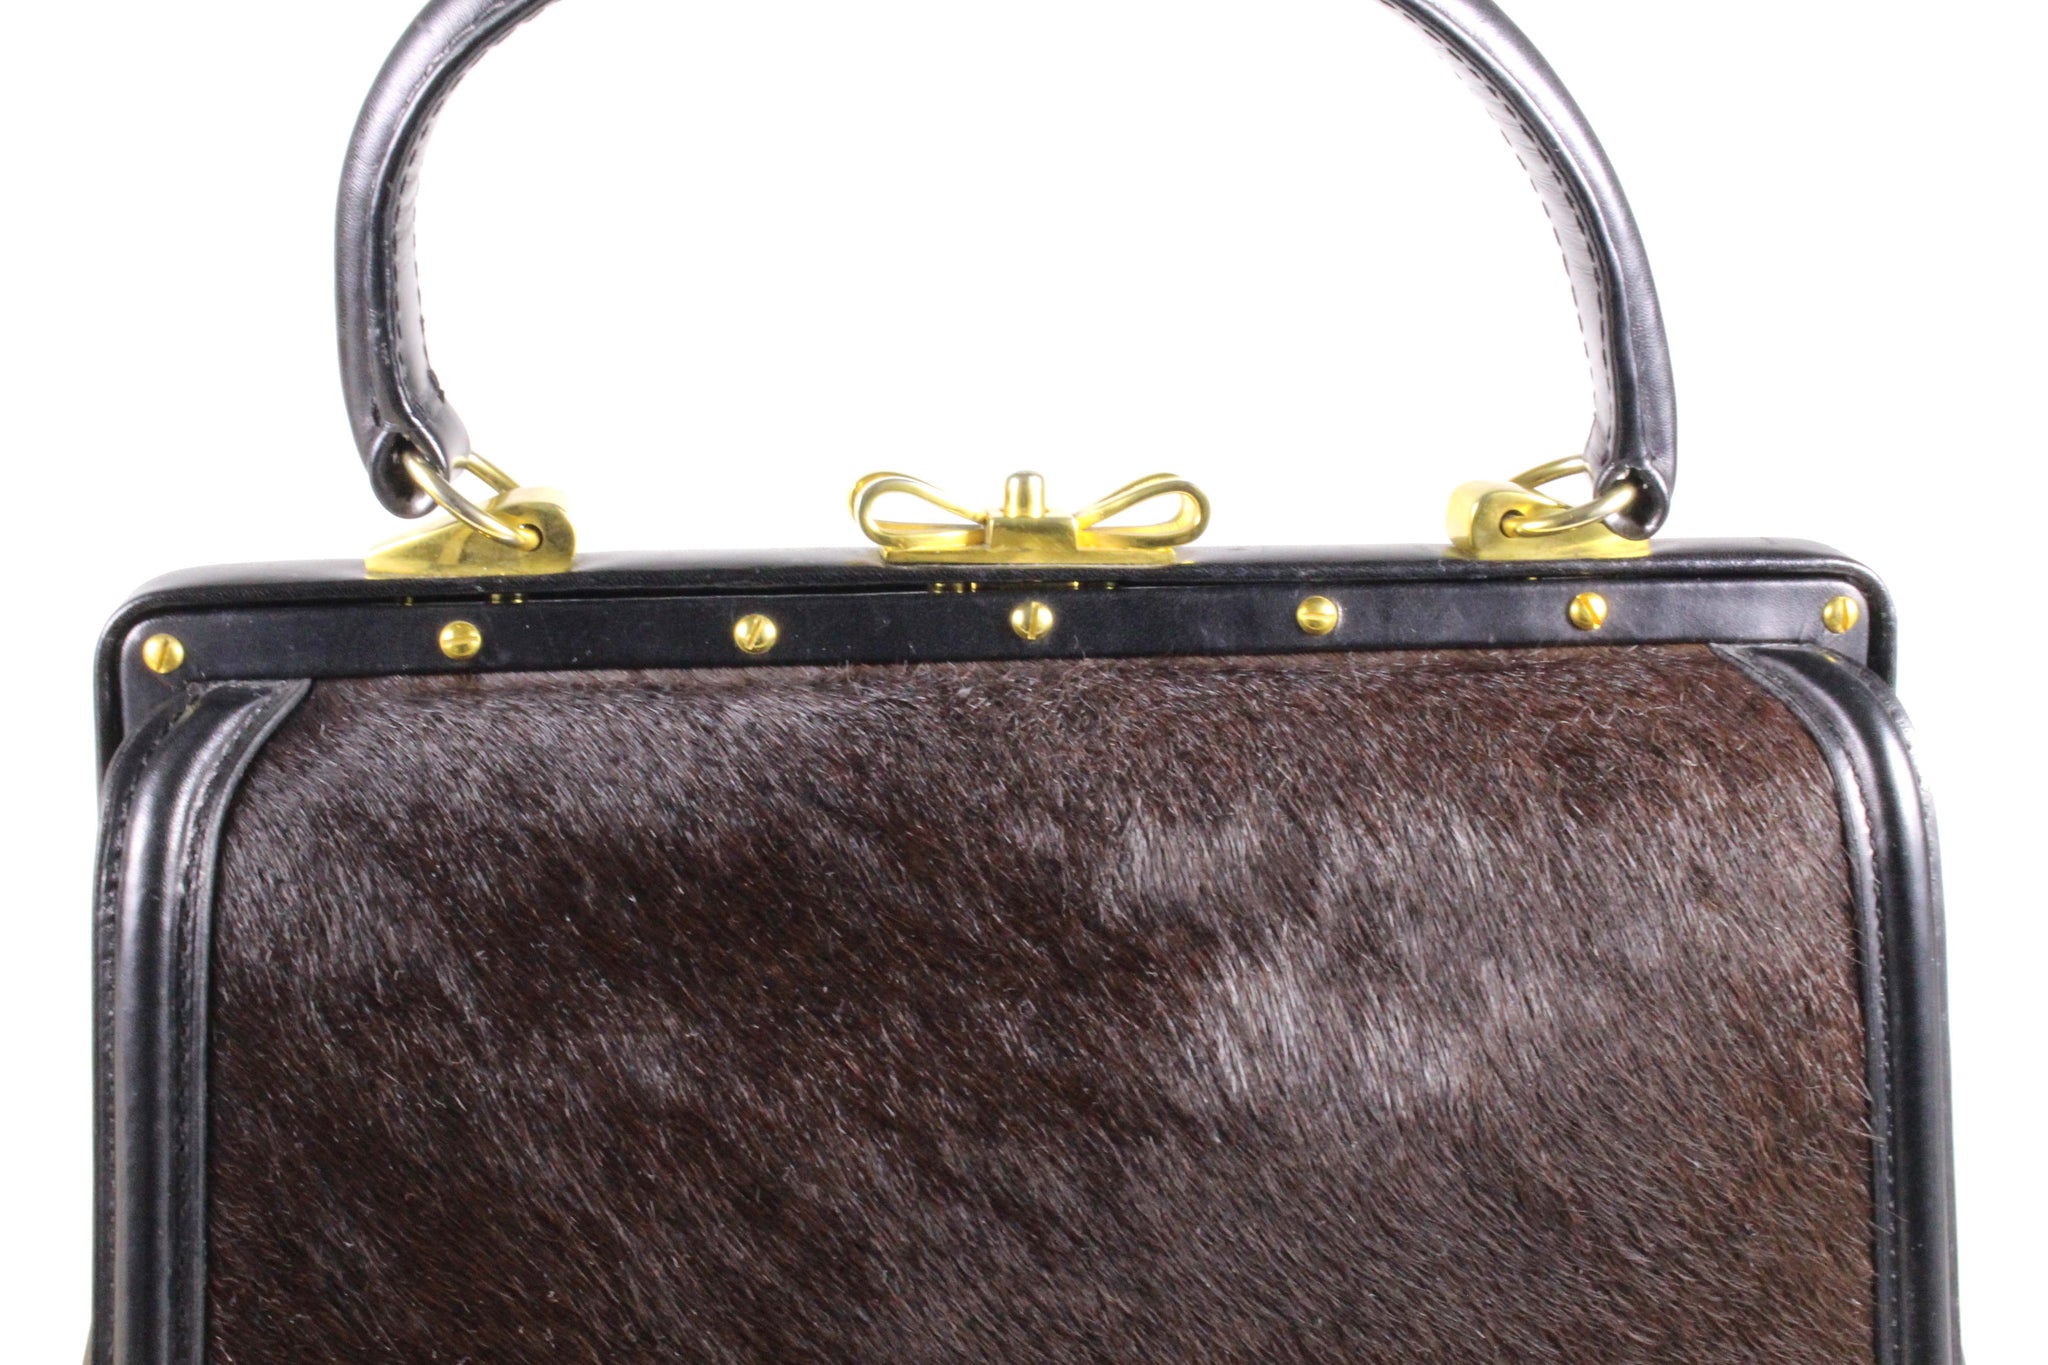 BELLA PURSE | Frame bag | Handmade Handbag